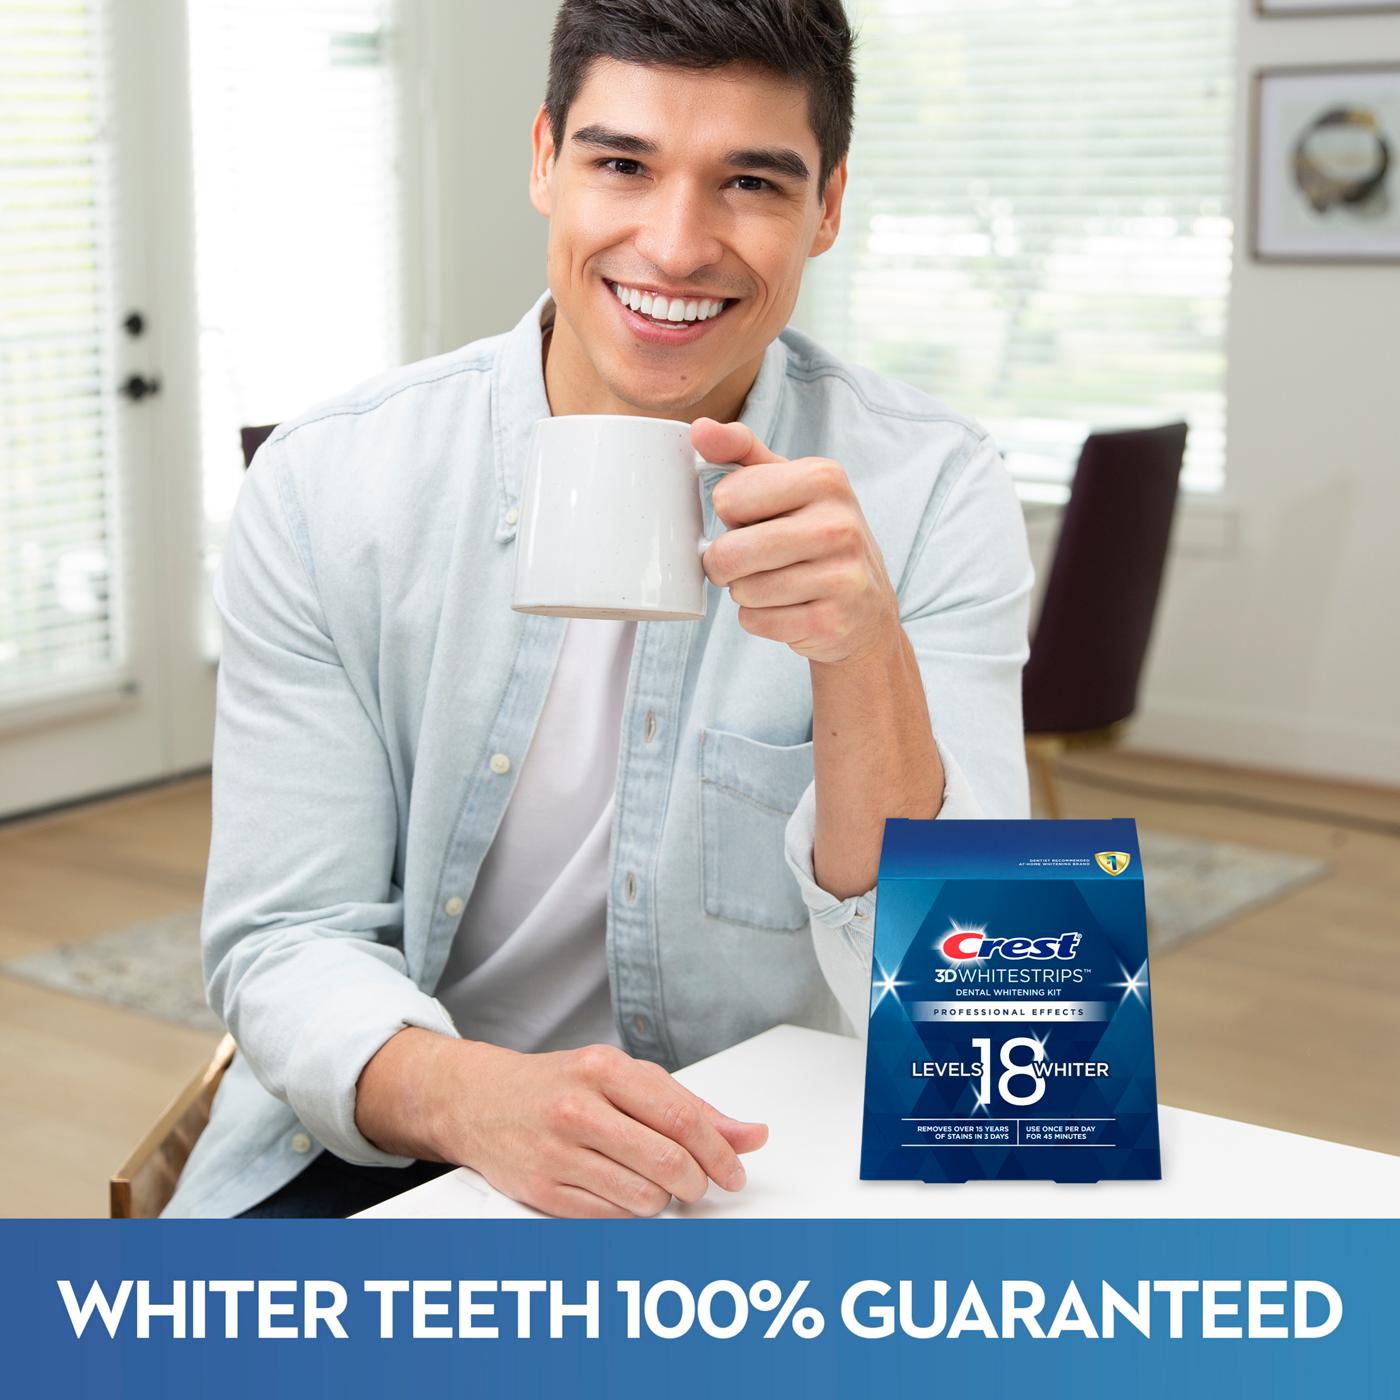 Crest 3D Whitestrips Professional Effects Dental Whitening Kit; image 6 of 6